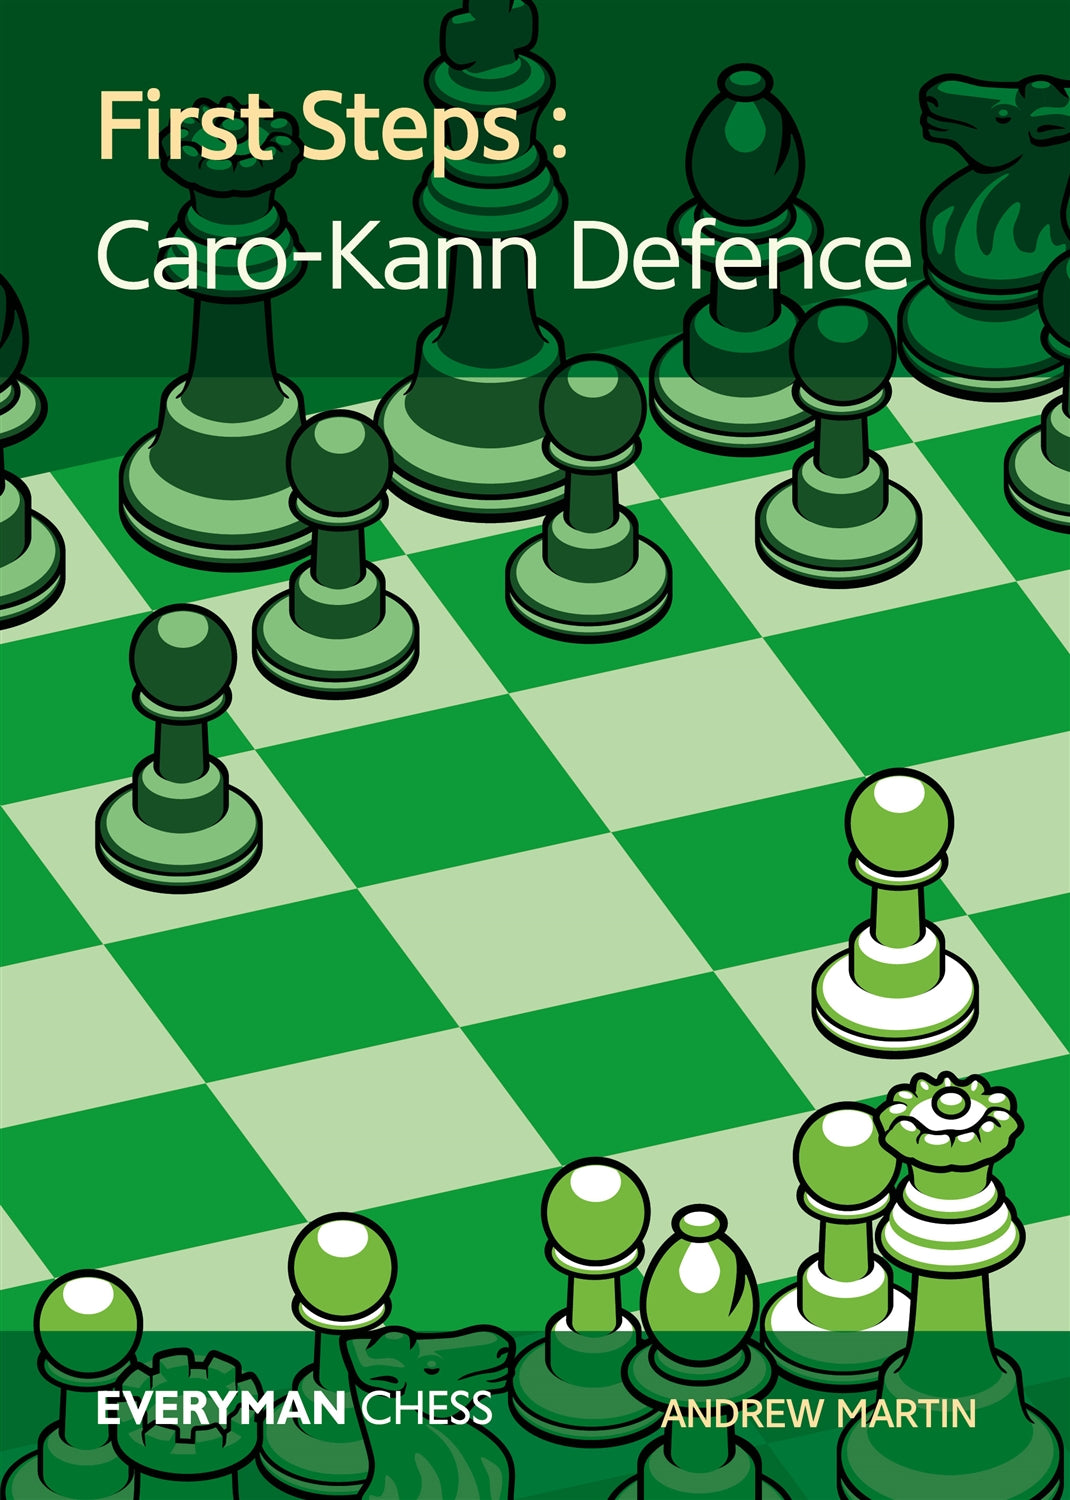 The Caro-Kann Defense - Classical Variation